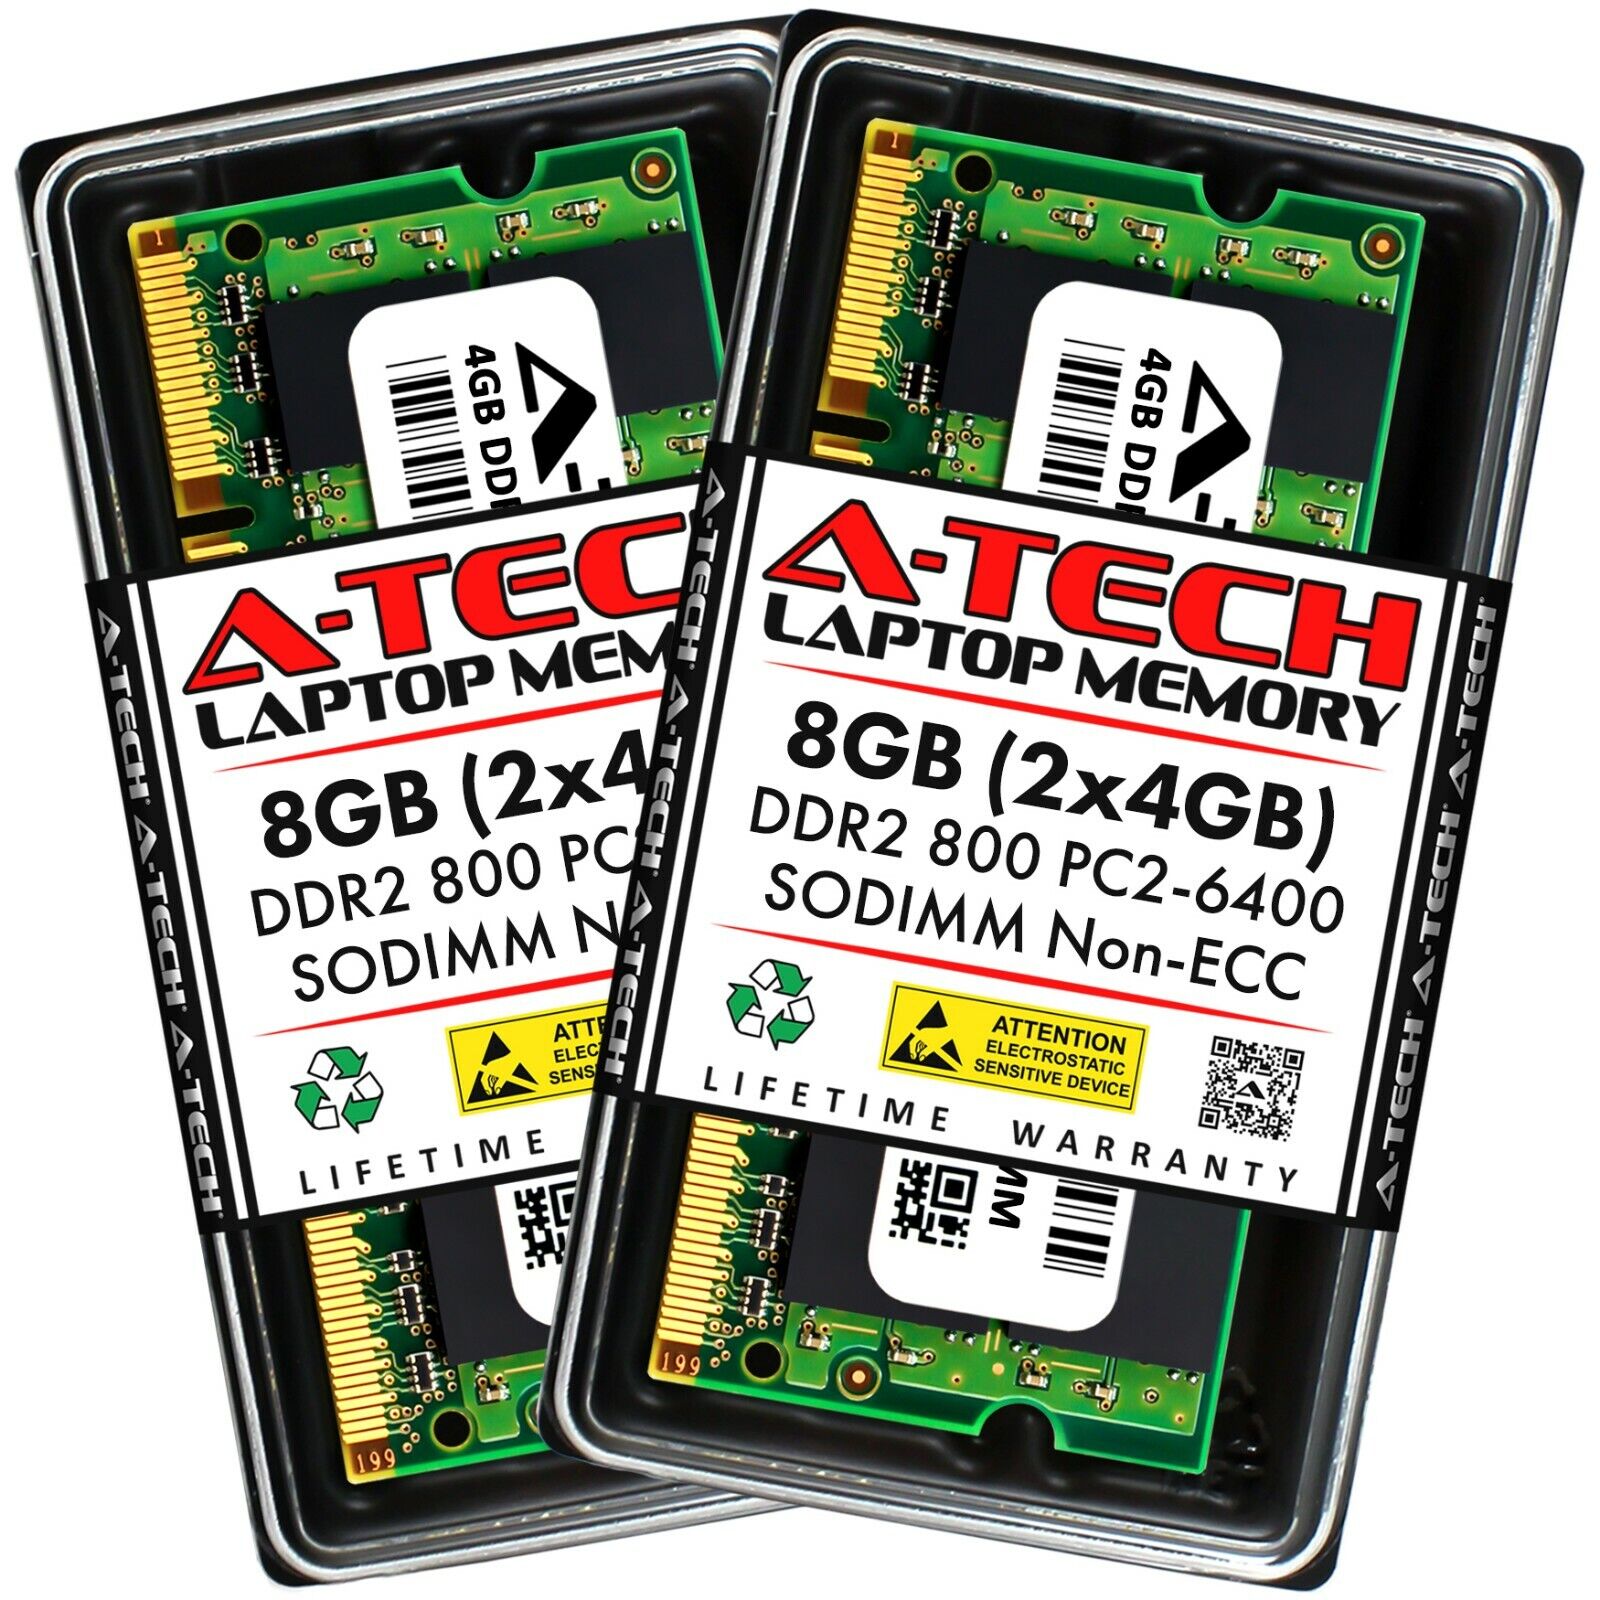 A-Tech 8GB 2 x 4GB PC2-6400 Laptop SODIMM DDR2 800 MHz Notebook Memory RAM 4G 8G